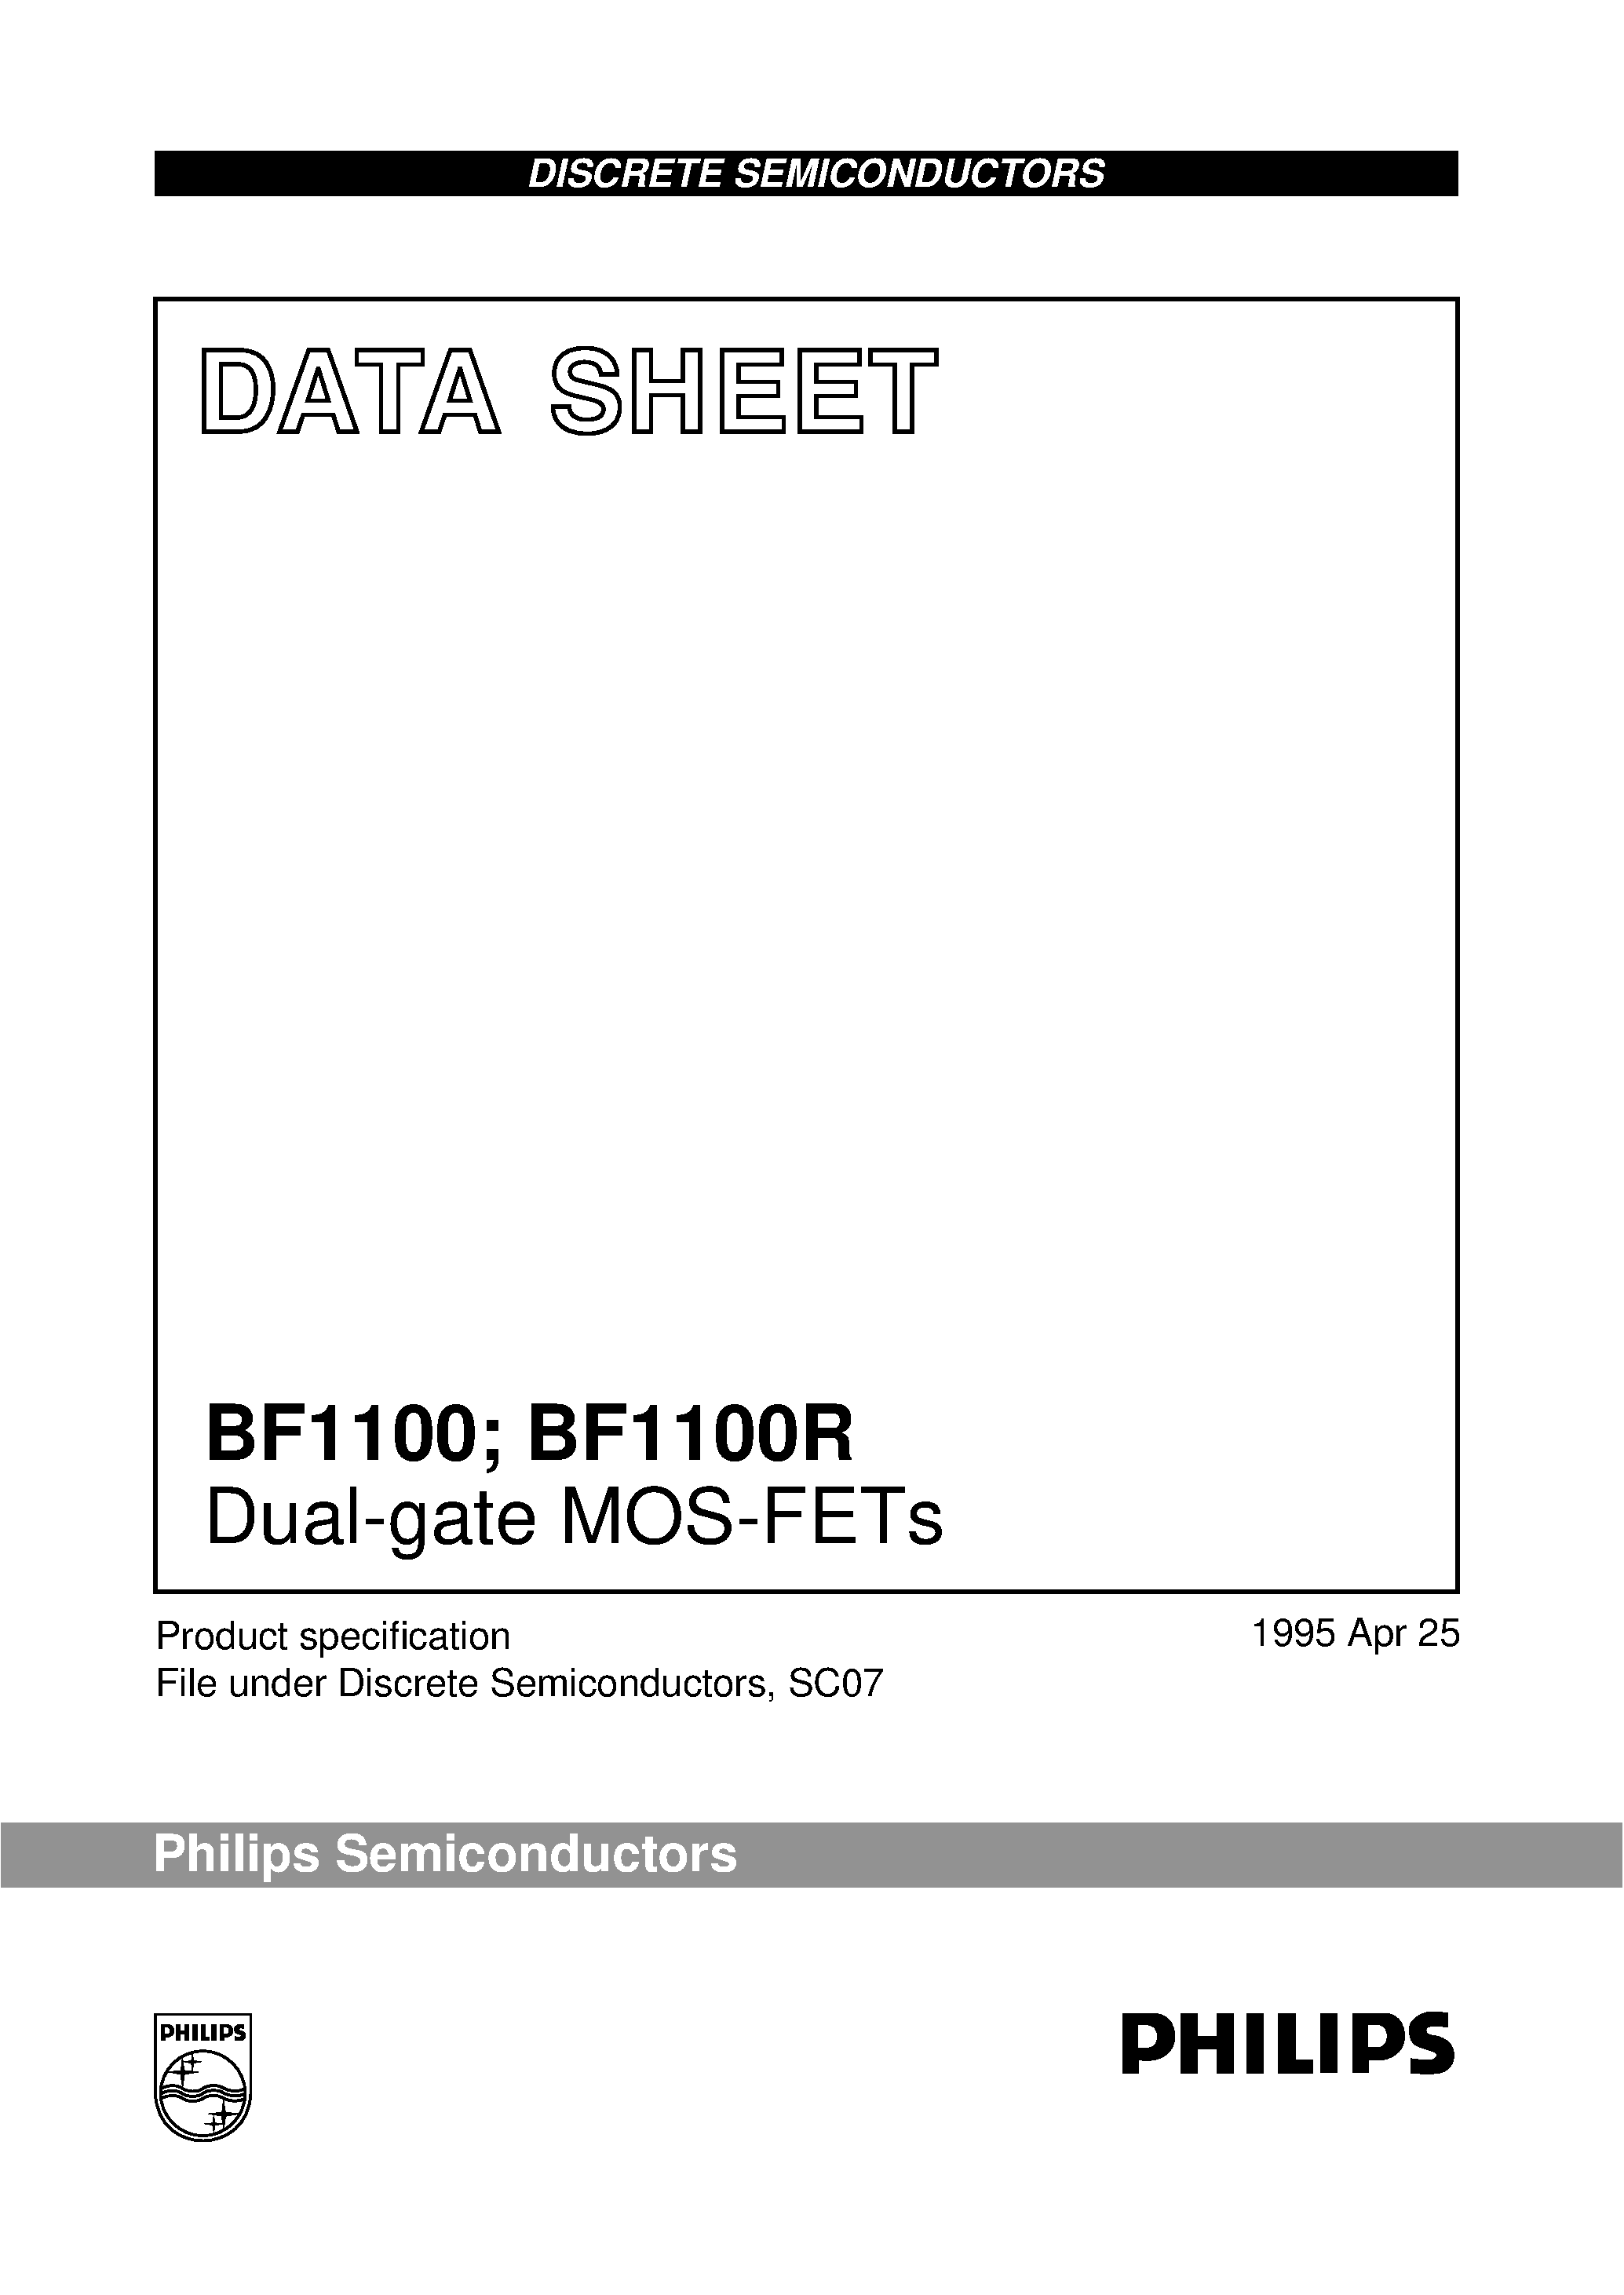 Даташит BF1100 - Dual-gate MOS-FETs страница 1